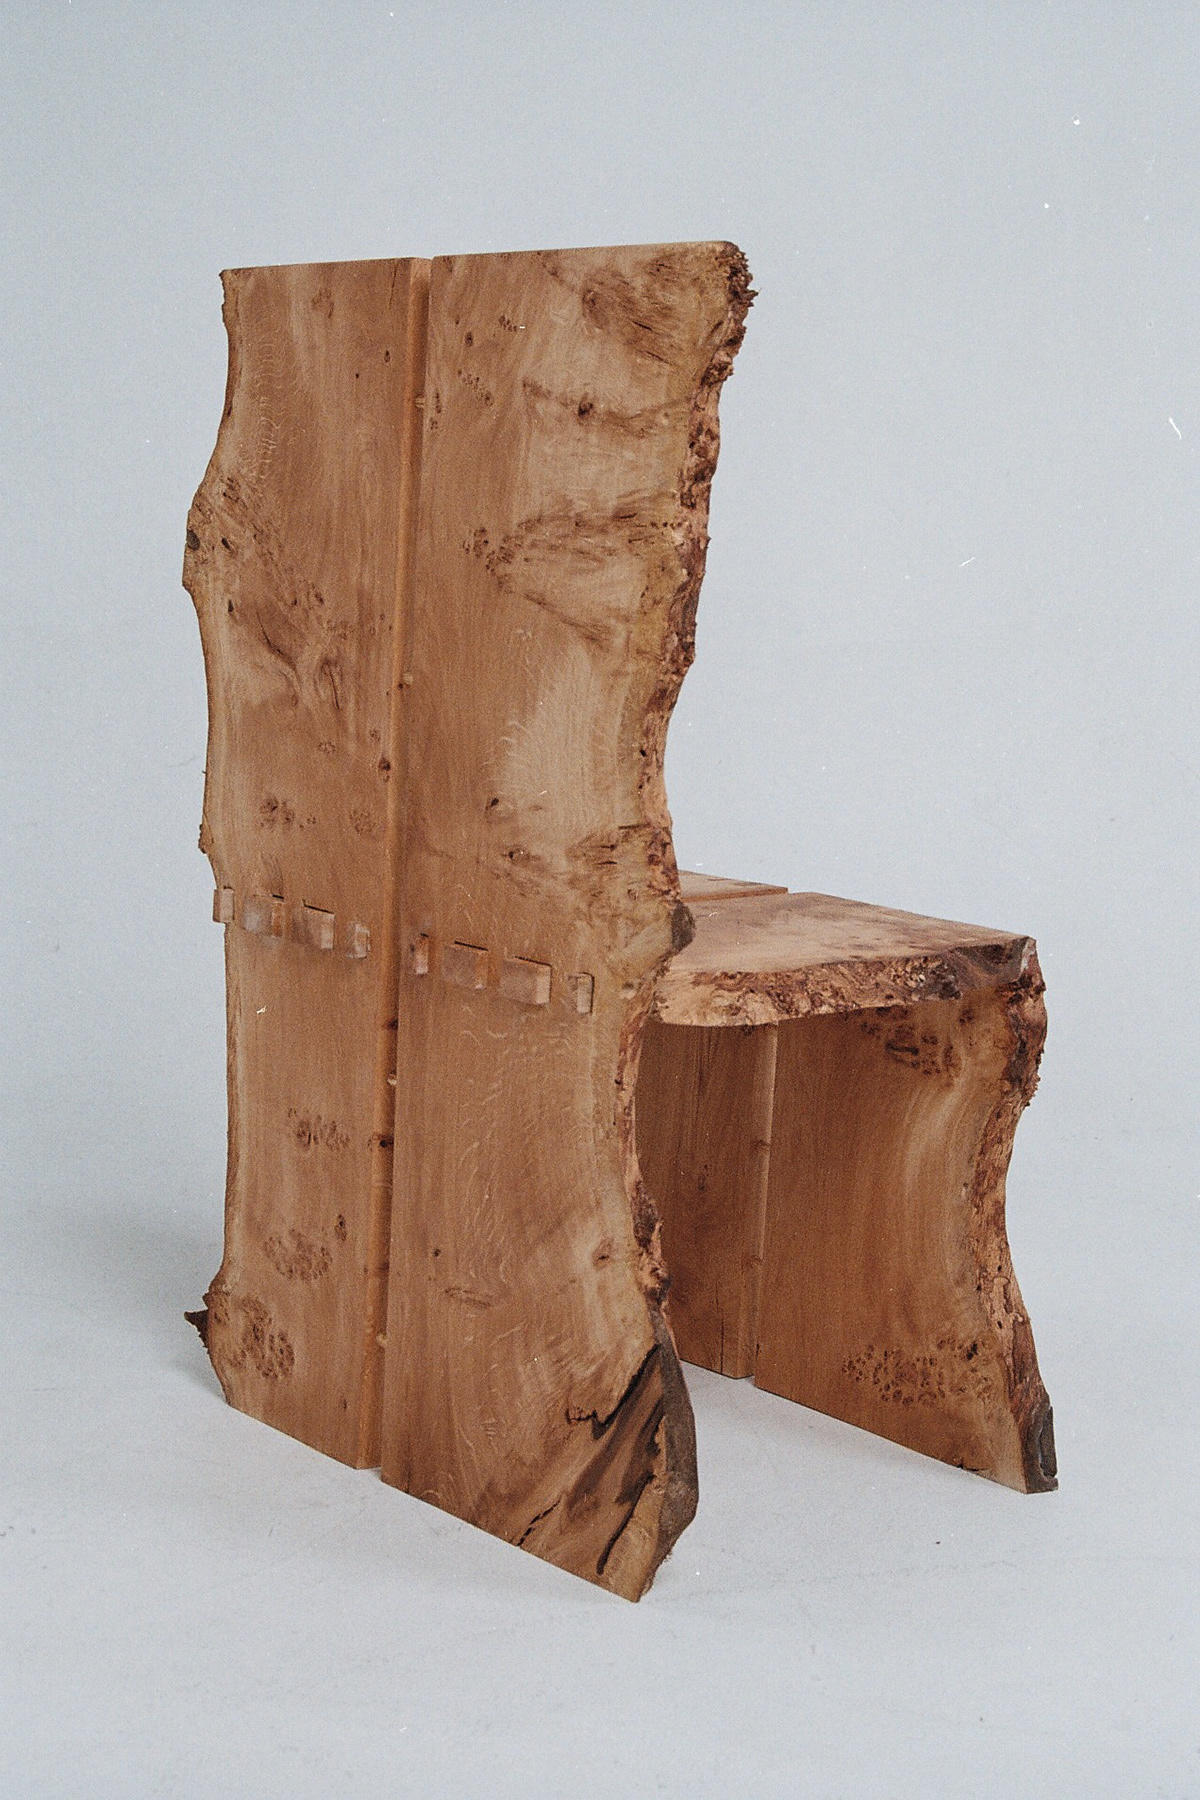 furniture  Contempoary  SEAT   Wood  modern oak  Outdoor  bespoke  hand made